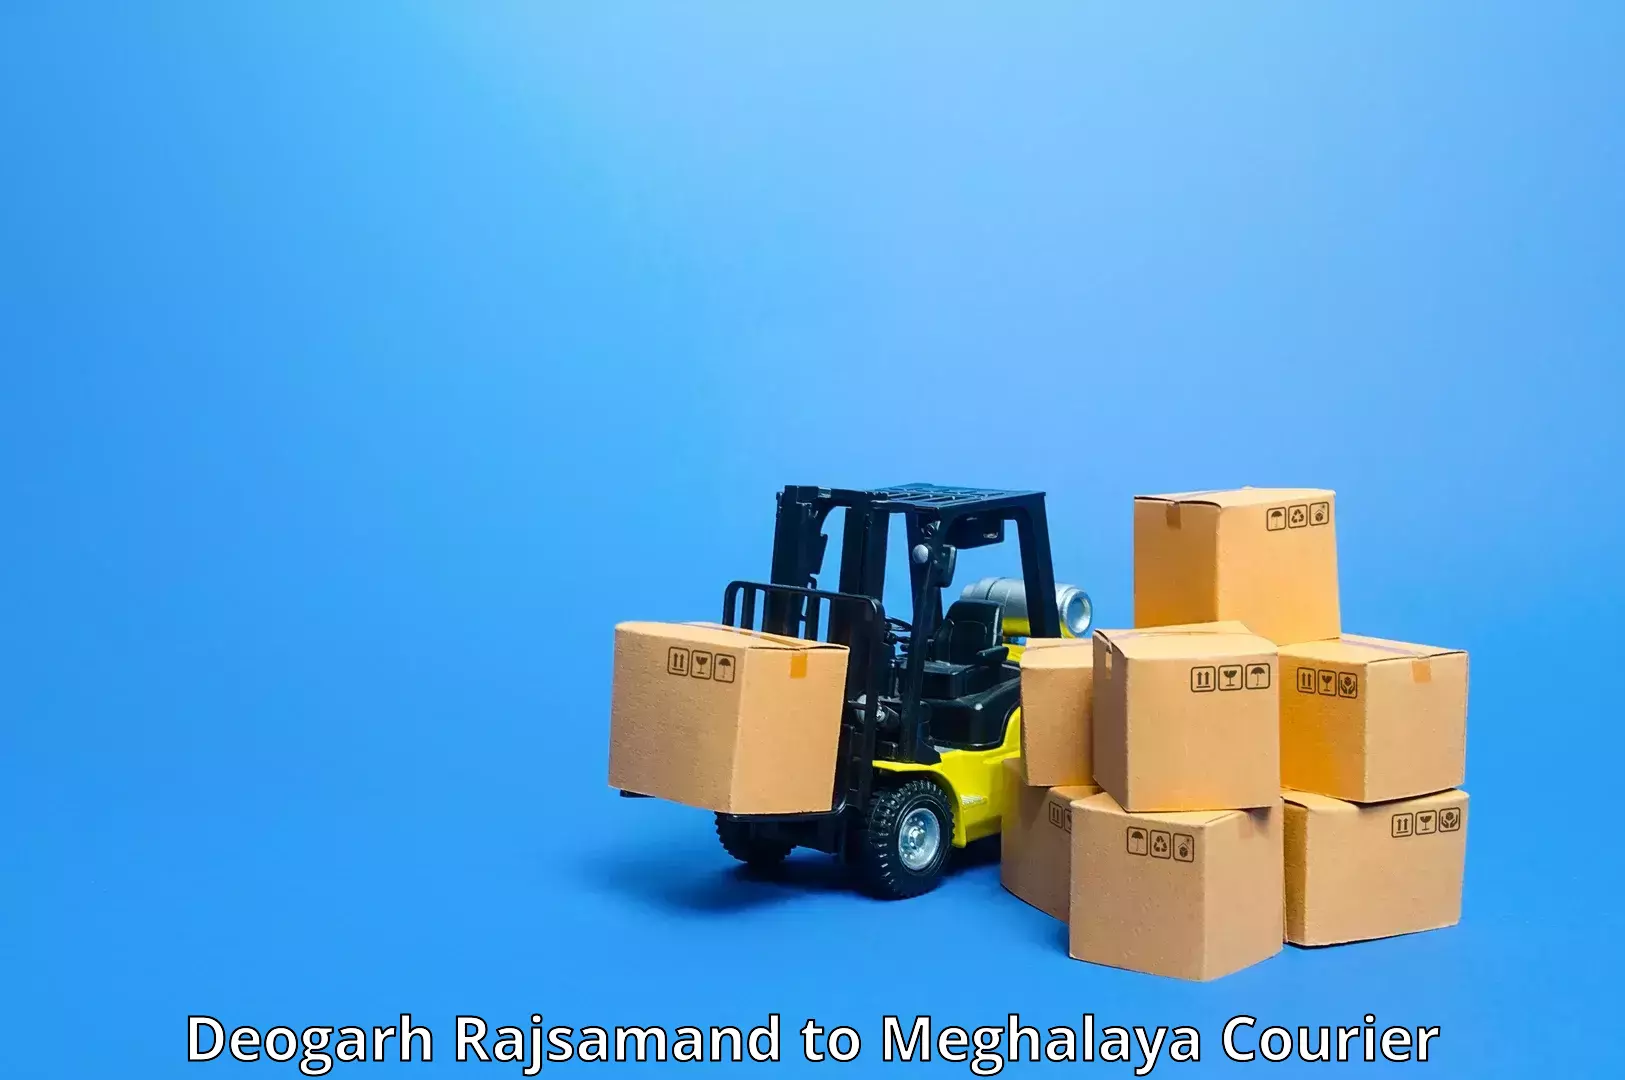 Courier service innovation Deogarh Rajsamand to Meghalaya